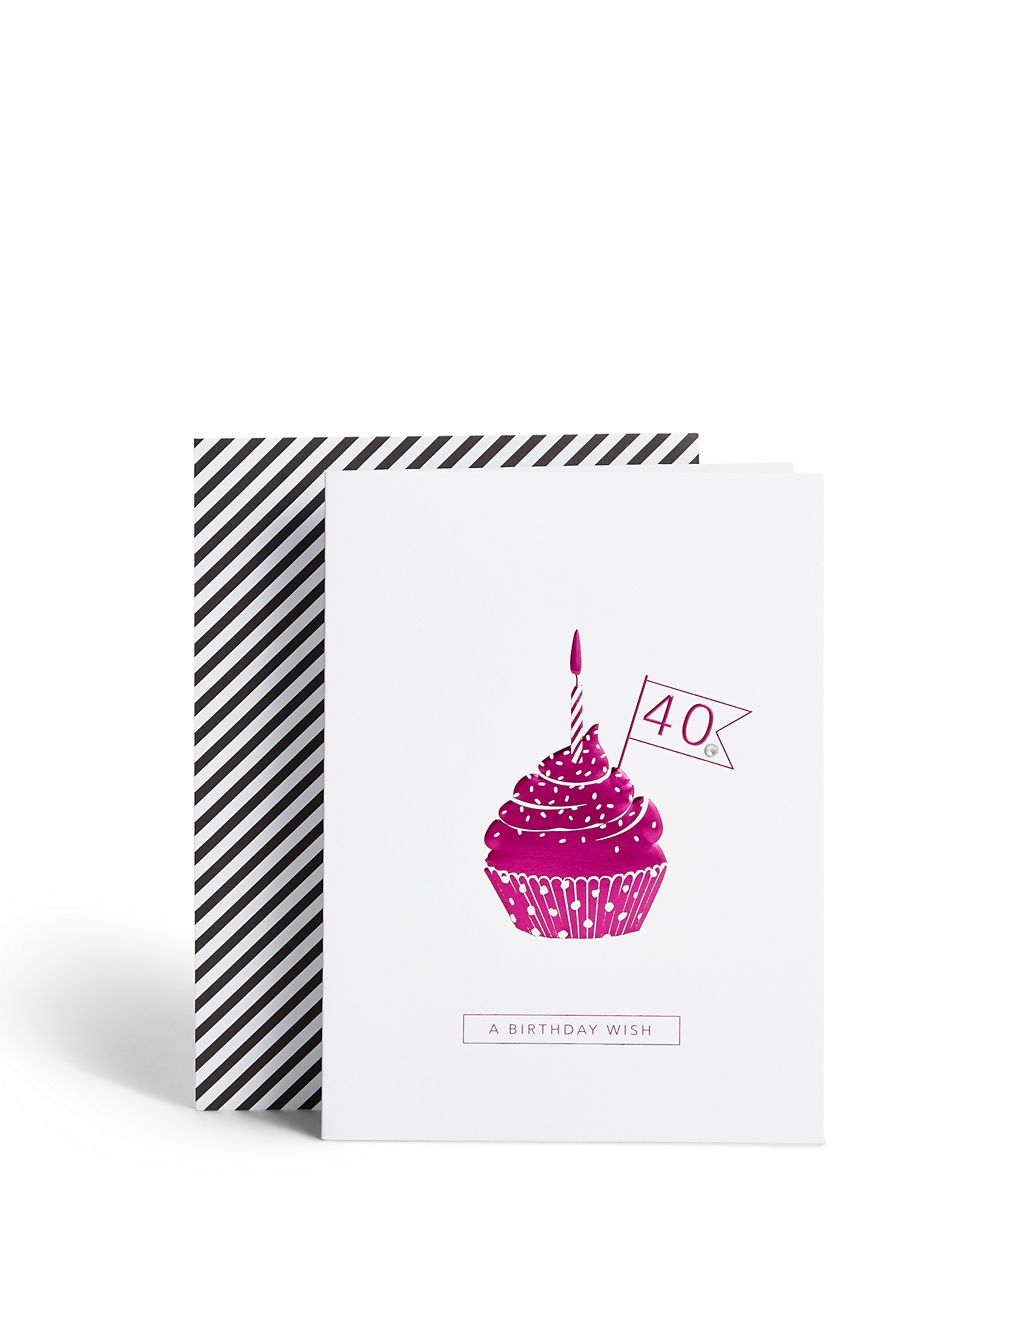 Age 40 Cupcake Birthday Card 1 of 2